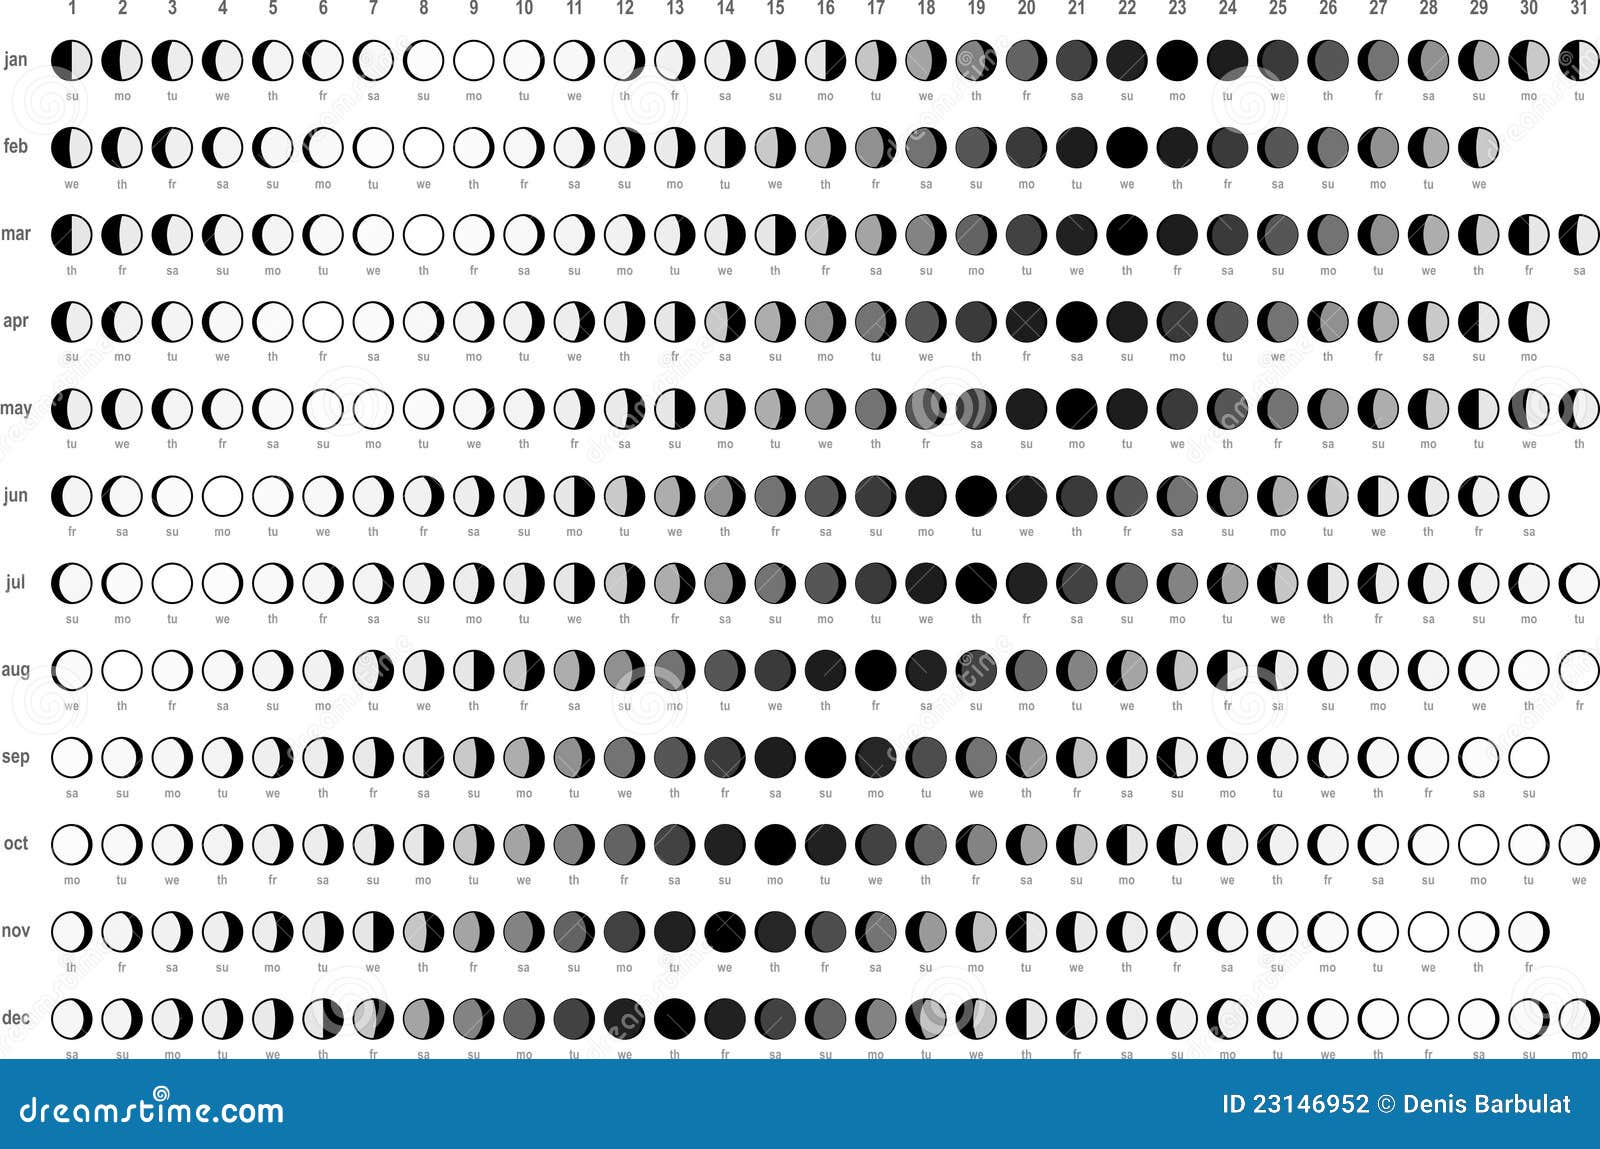 Moon Phase Chart 2012